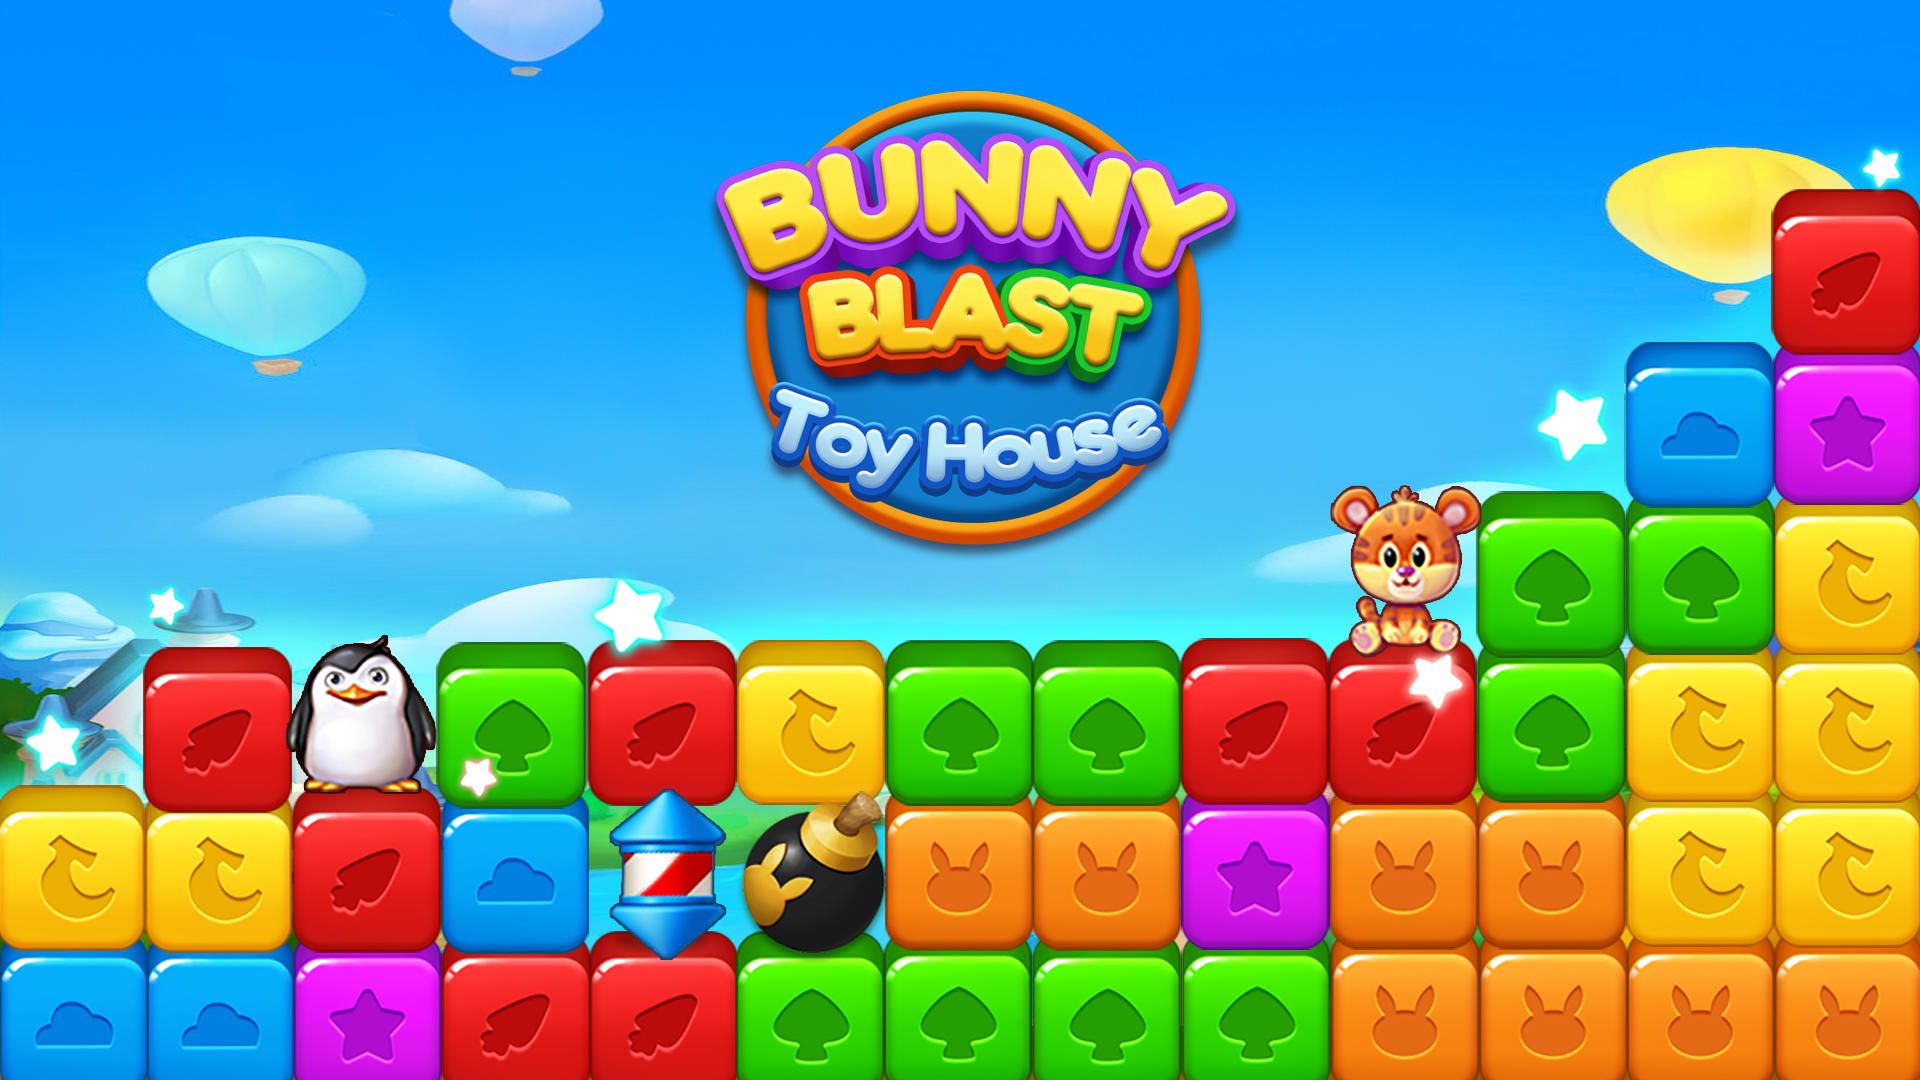 Banner of Bunny Blast: บ้านของเล่น 